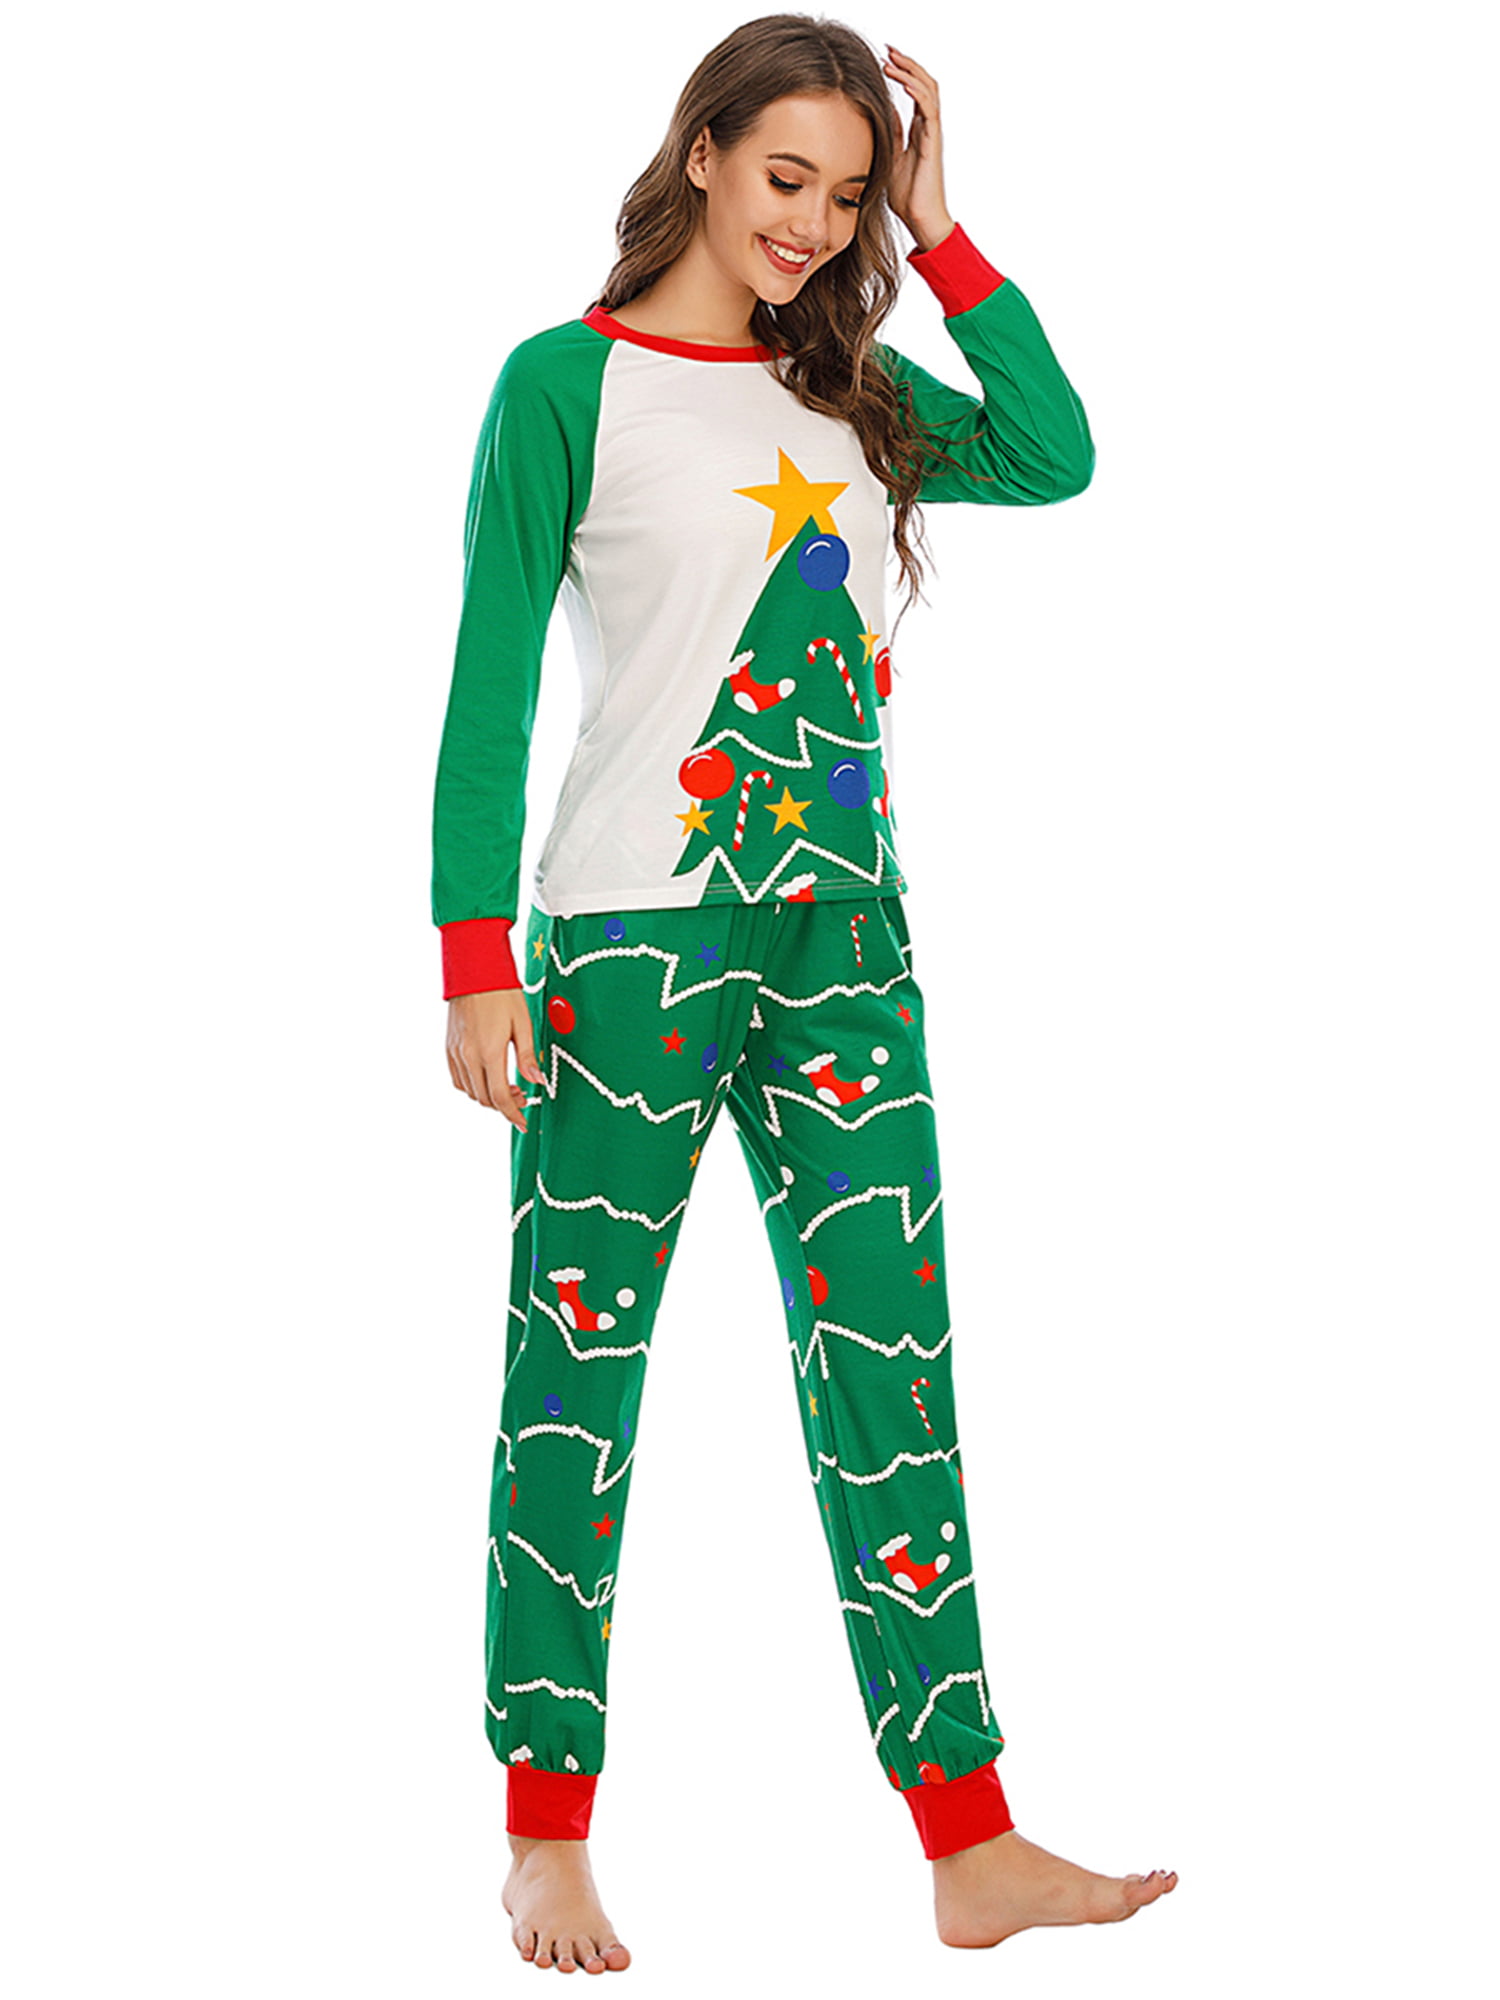 Binwwe Family Matching Christmas Pajamas Set Xmas Tree Top and Pants for Women Men Kids Baby 